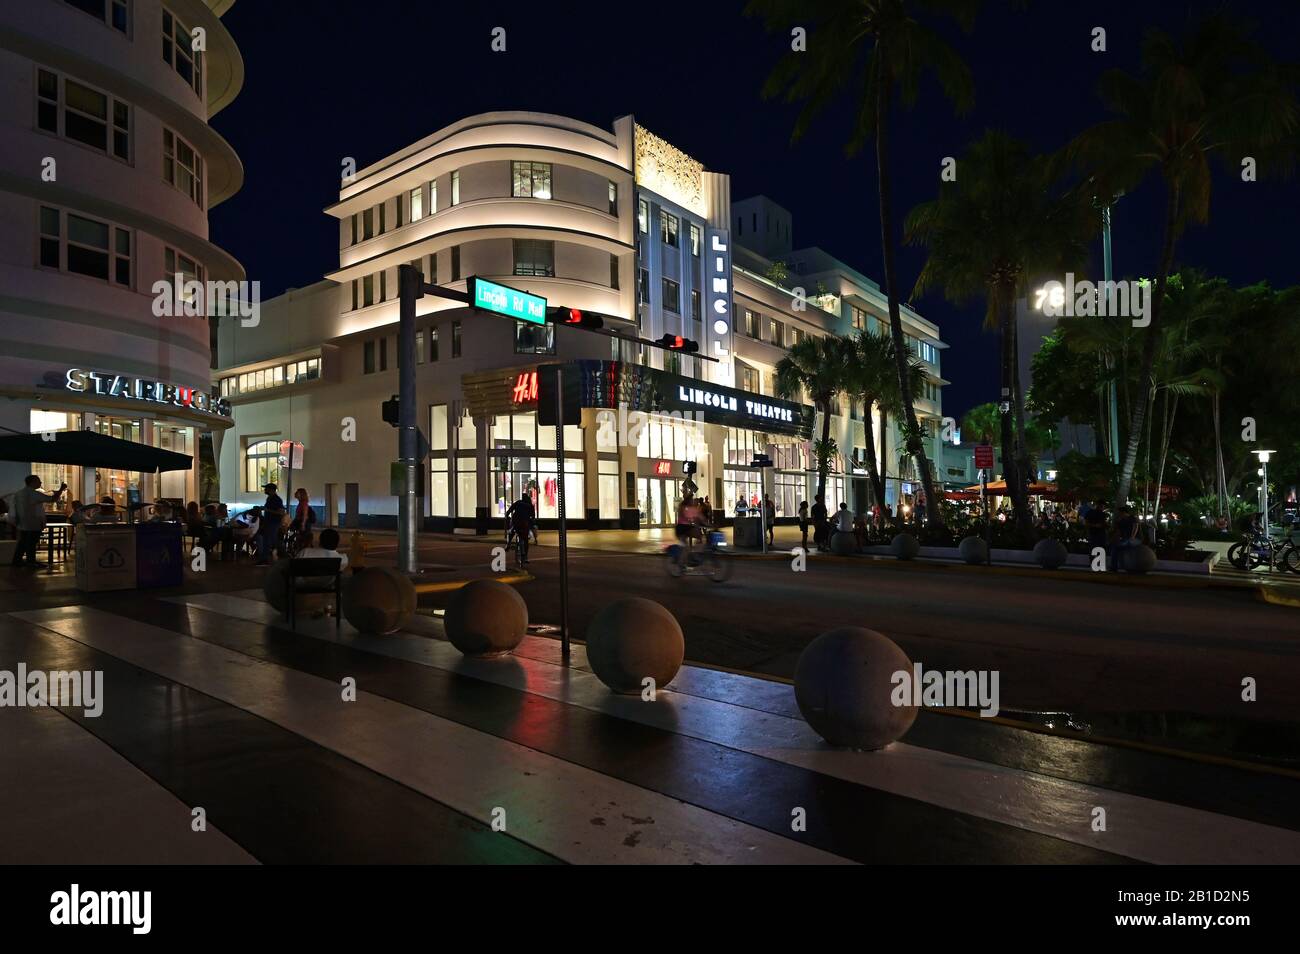 Miami Beach, Florida - February 17, 2020 - Lincoln Theatre on Lincoln Road Mall at night. Stock Photo